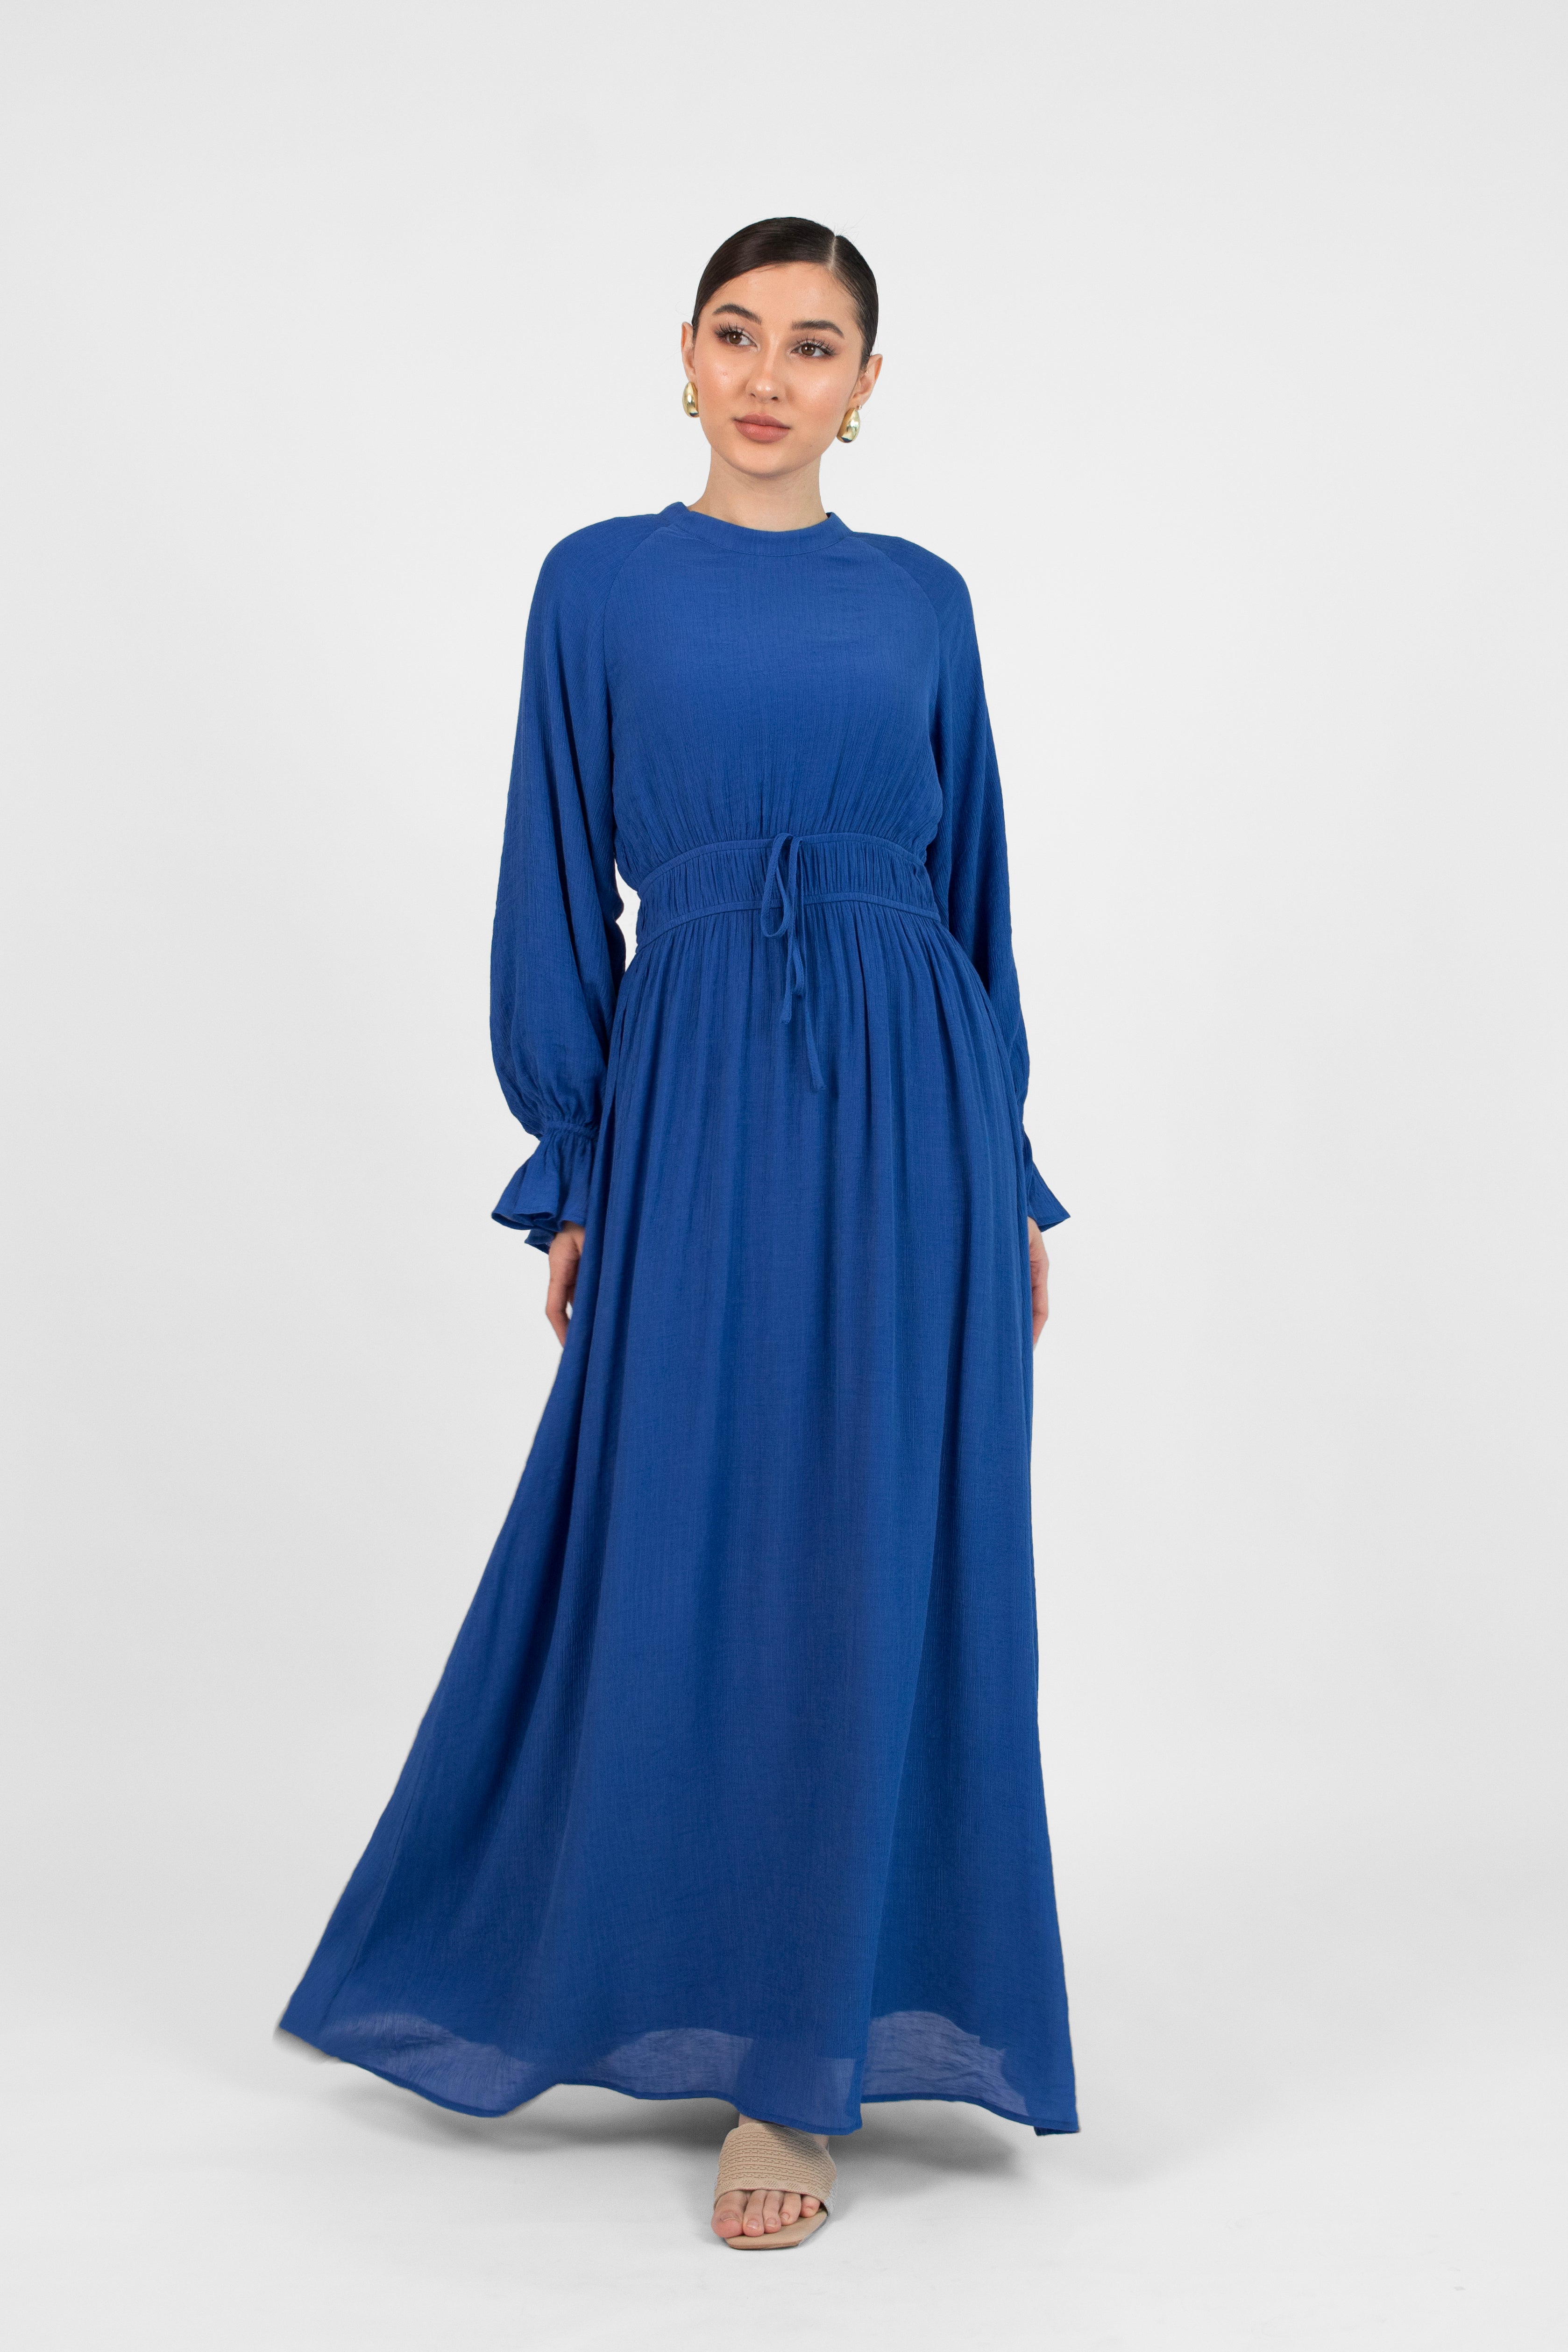 CA - Bow Elastic Waist Dress - Sapphire